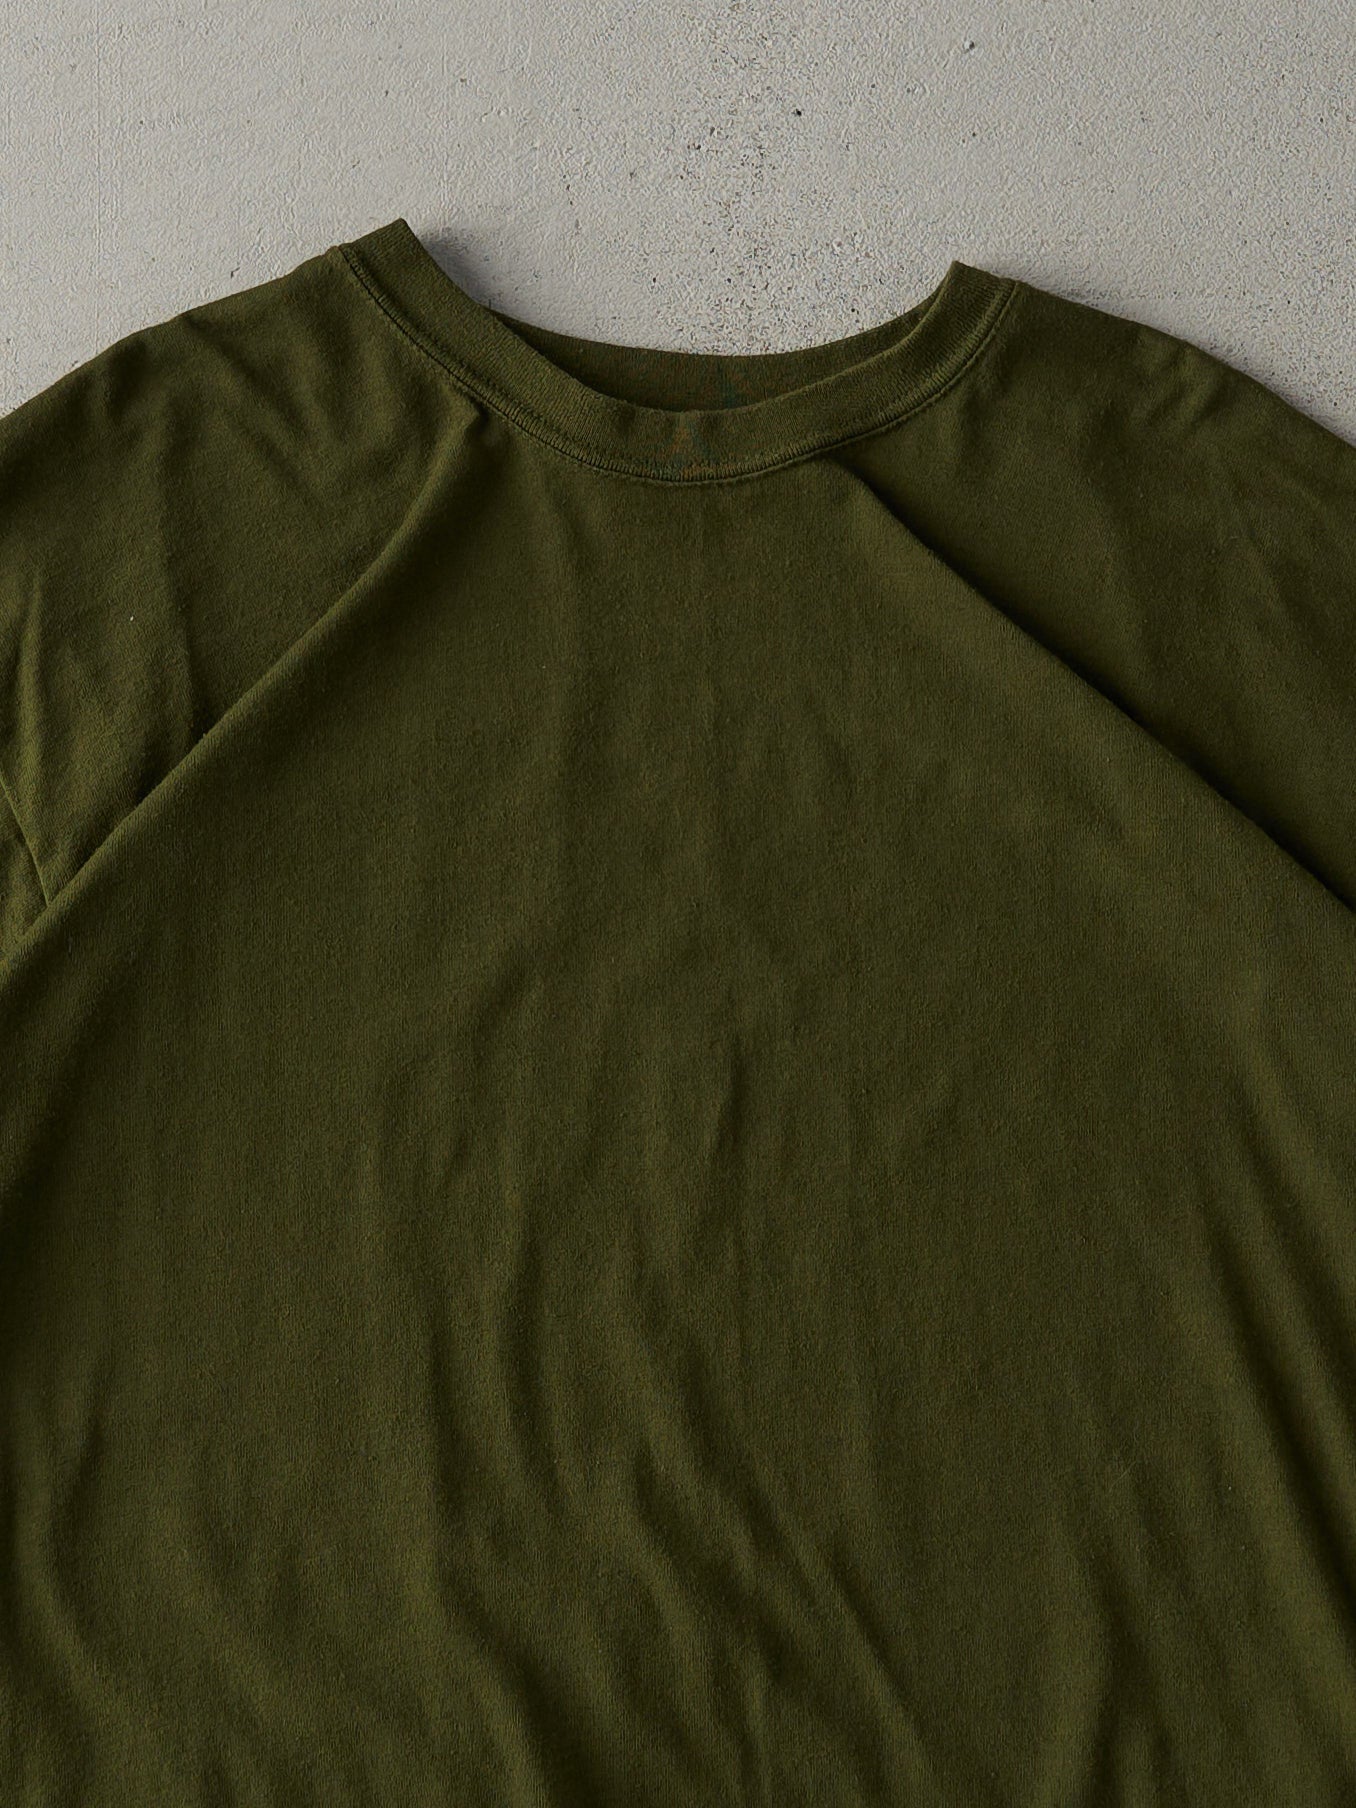 Vintage 90s Army Green Blank Tee (M/L)